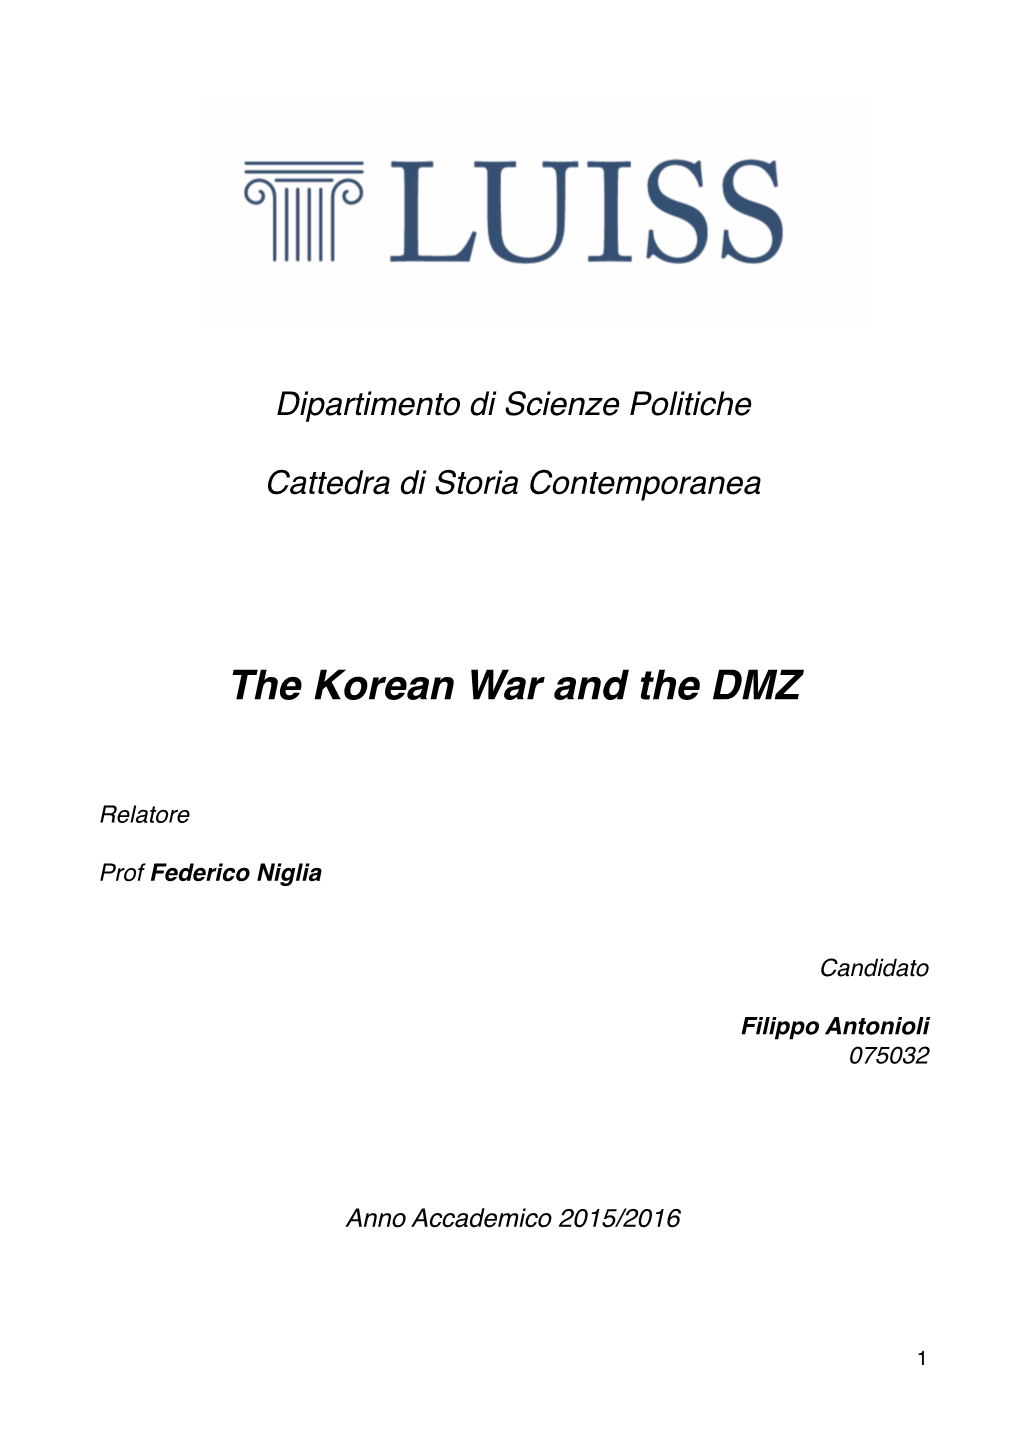 The Korean War and the DMZ